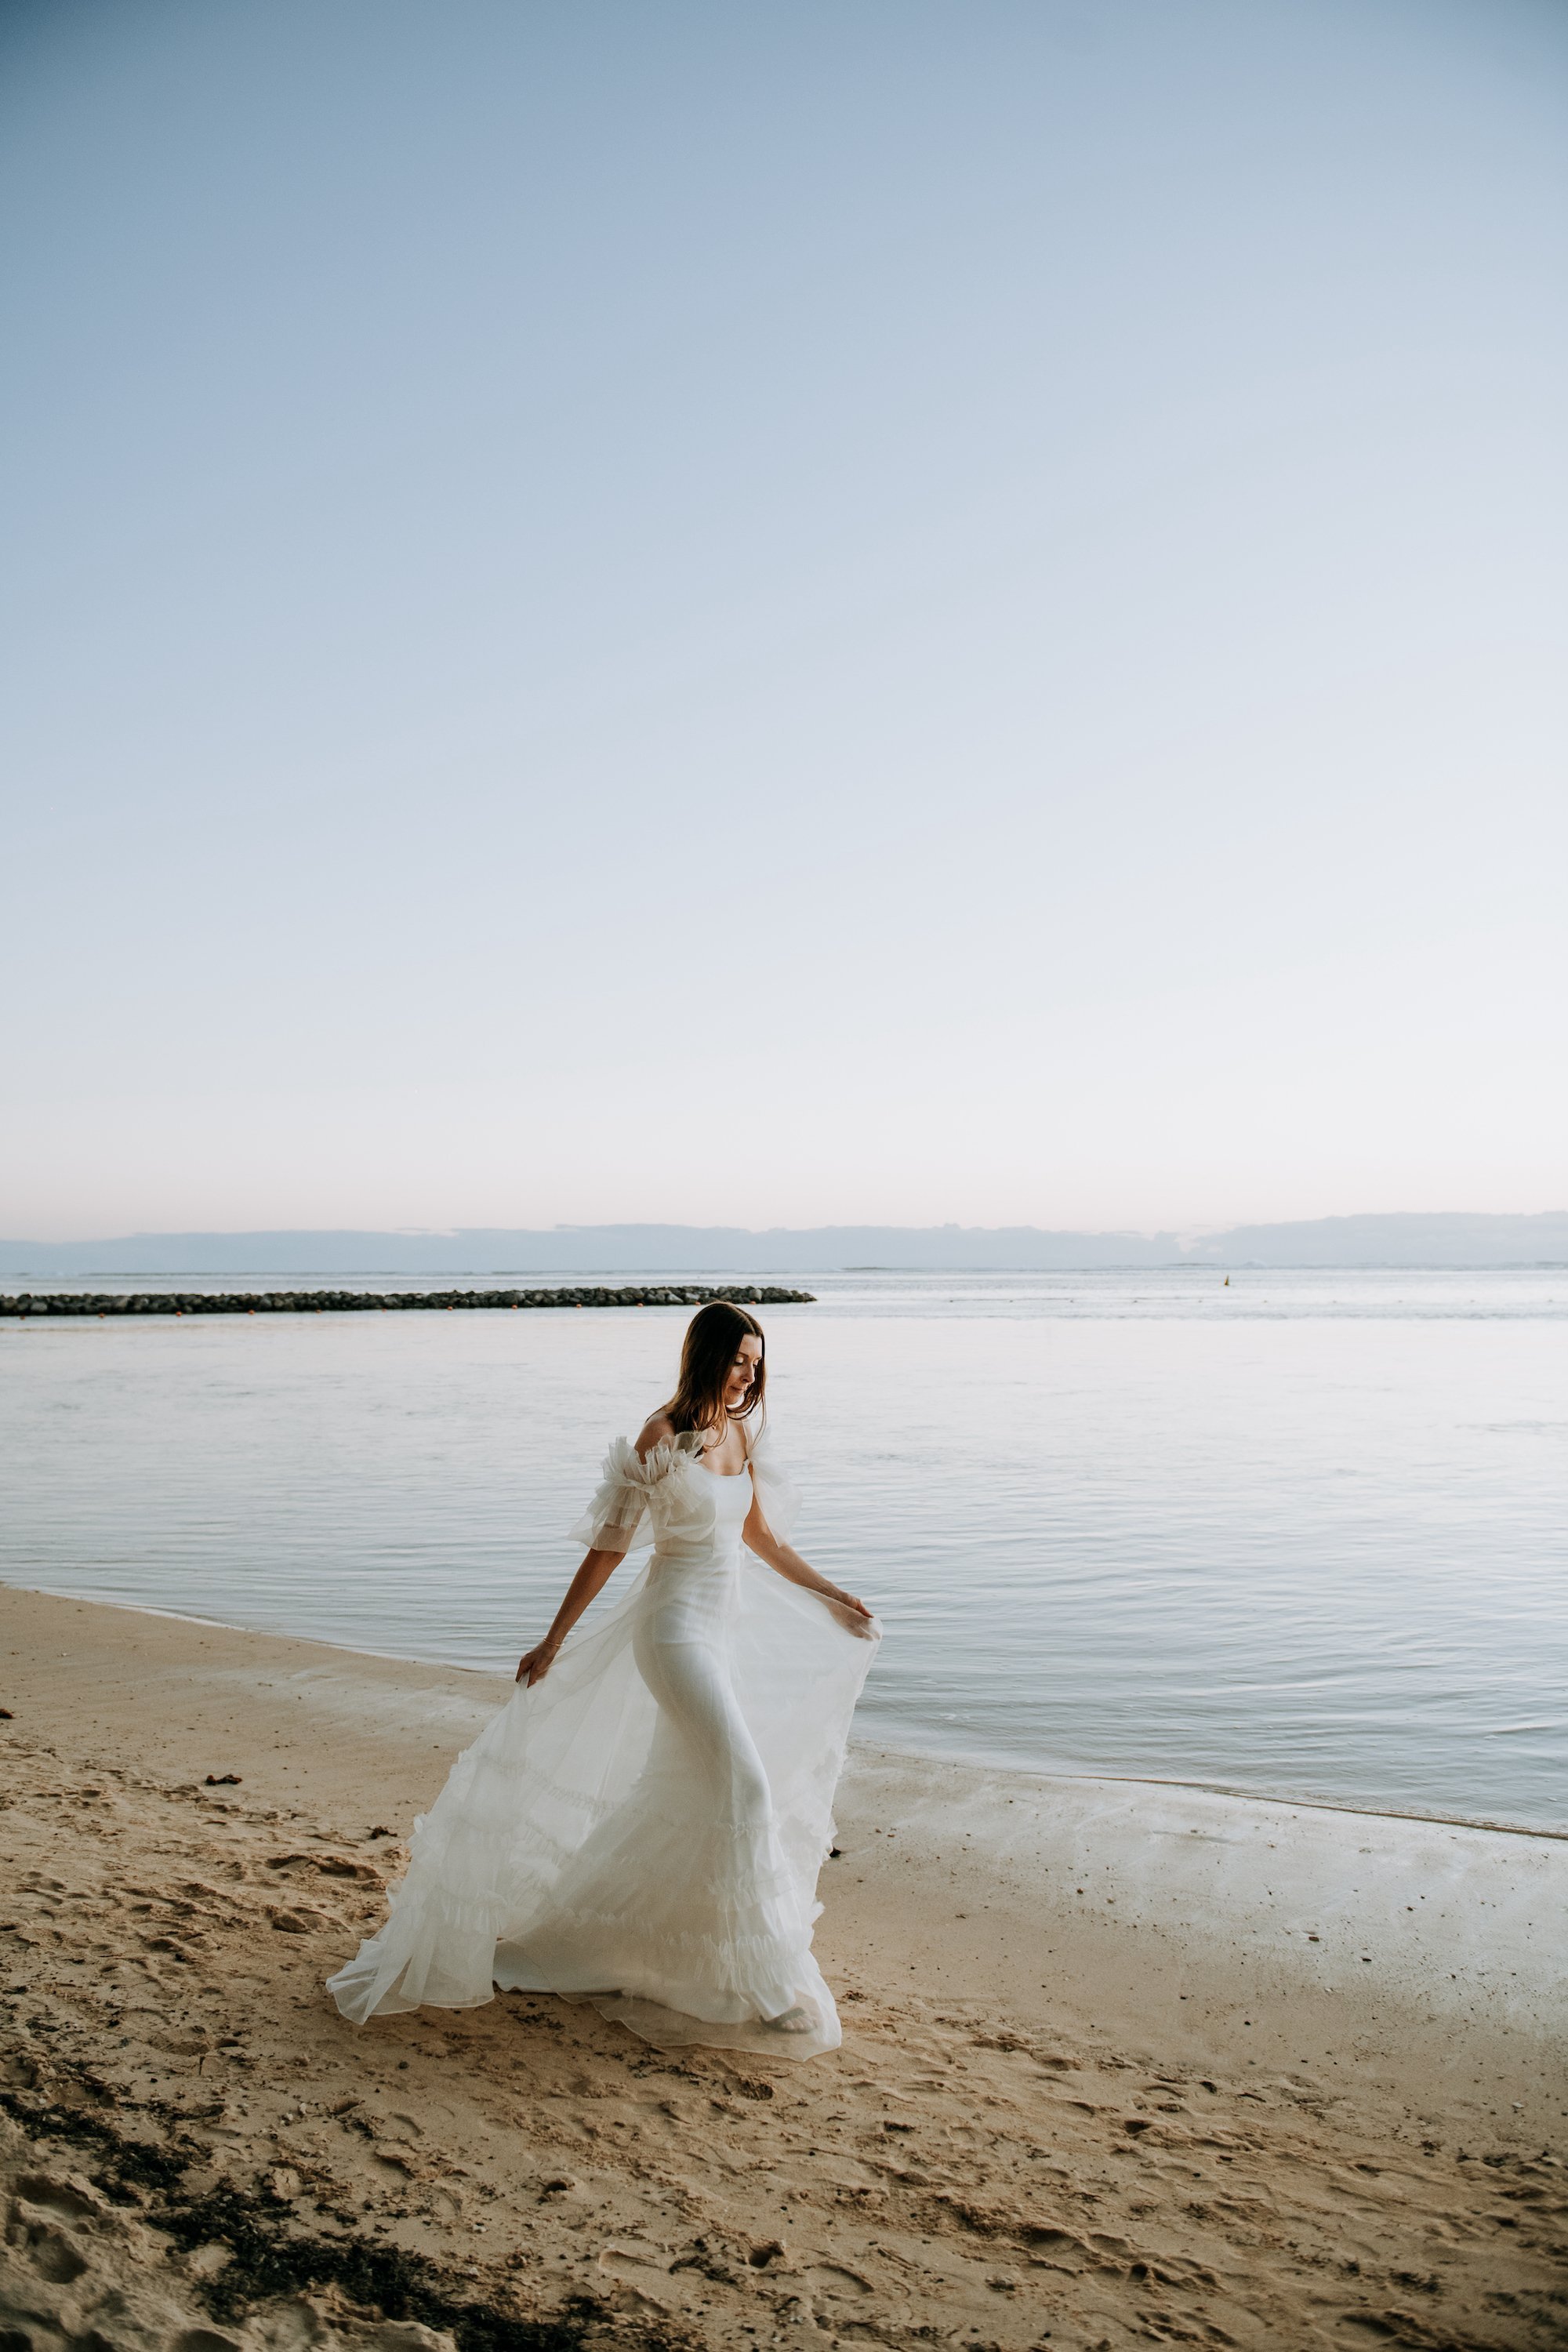 Beautiful Charlotte wore the silk organza Mayfair wedding dress by Halfpenny London for her beach destination wedding